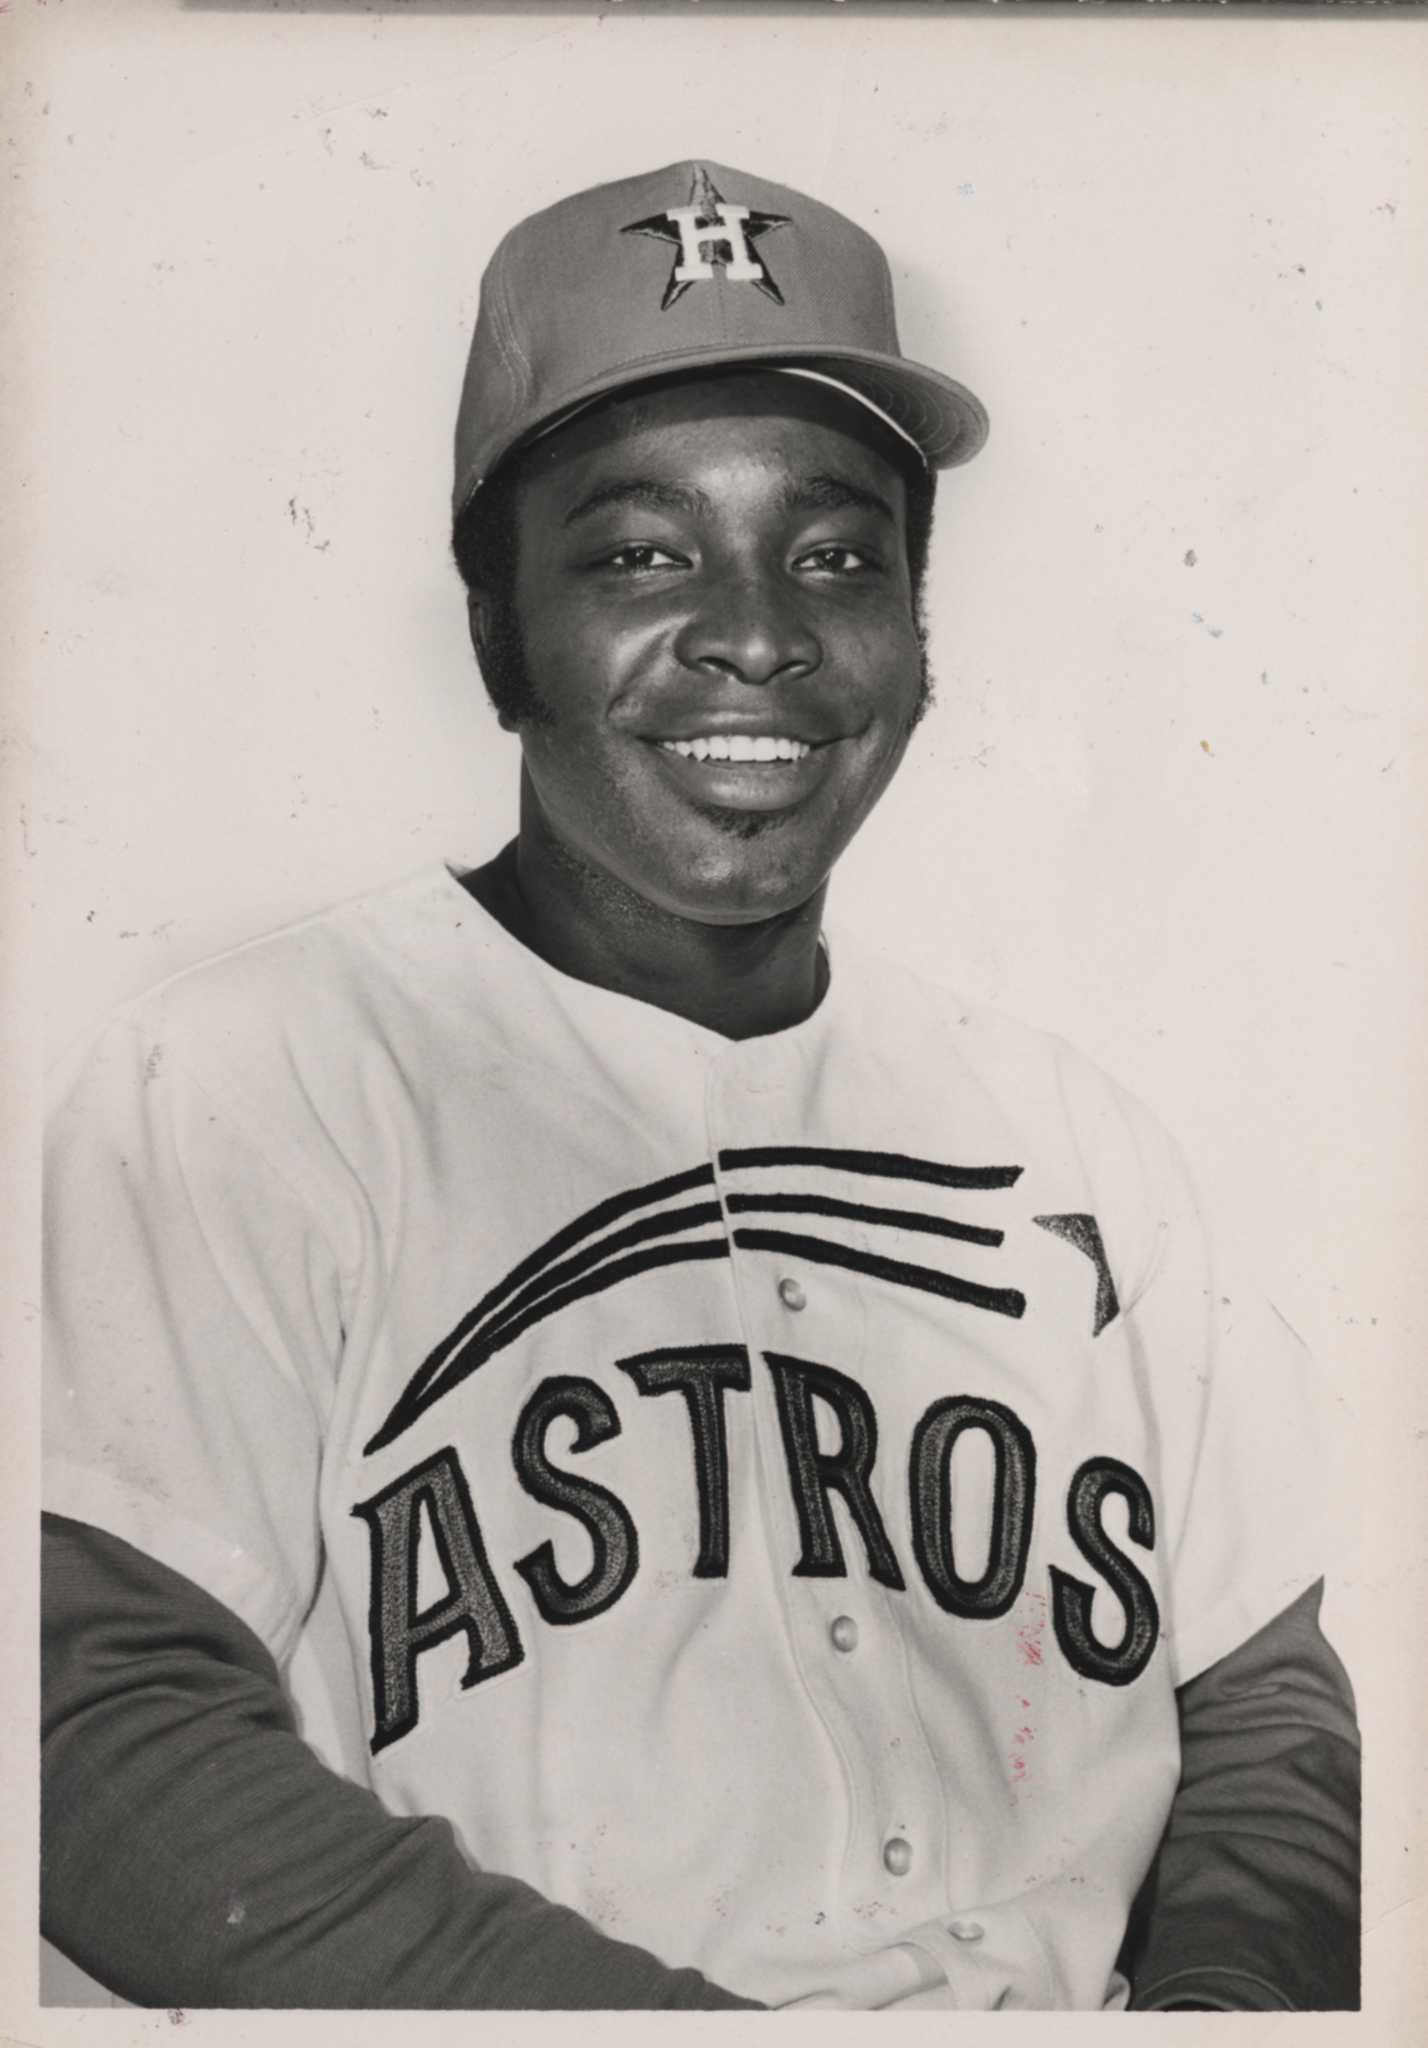 Hall of Famer Joe Morgan - the Astro who got away - dead at 77